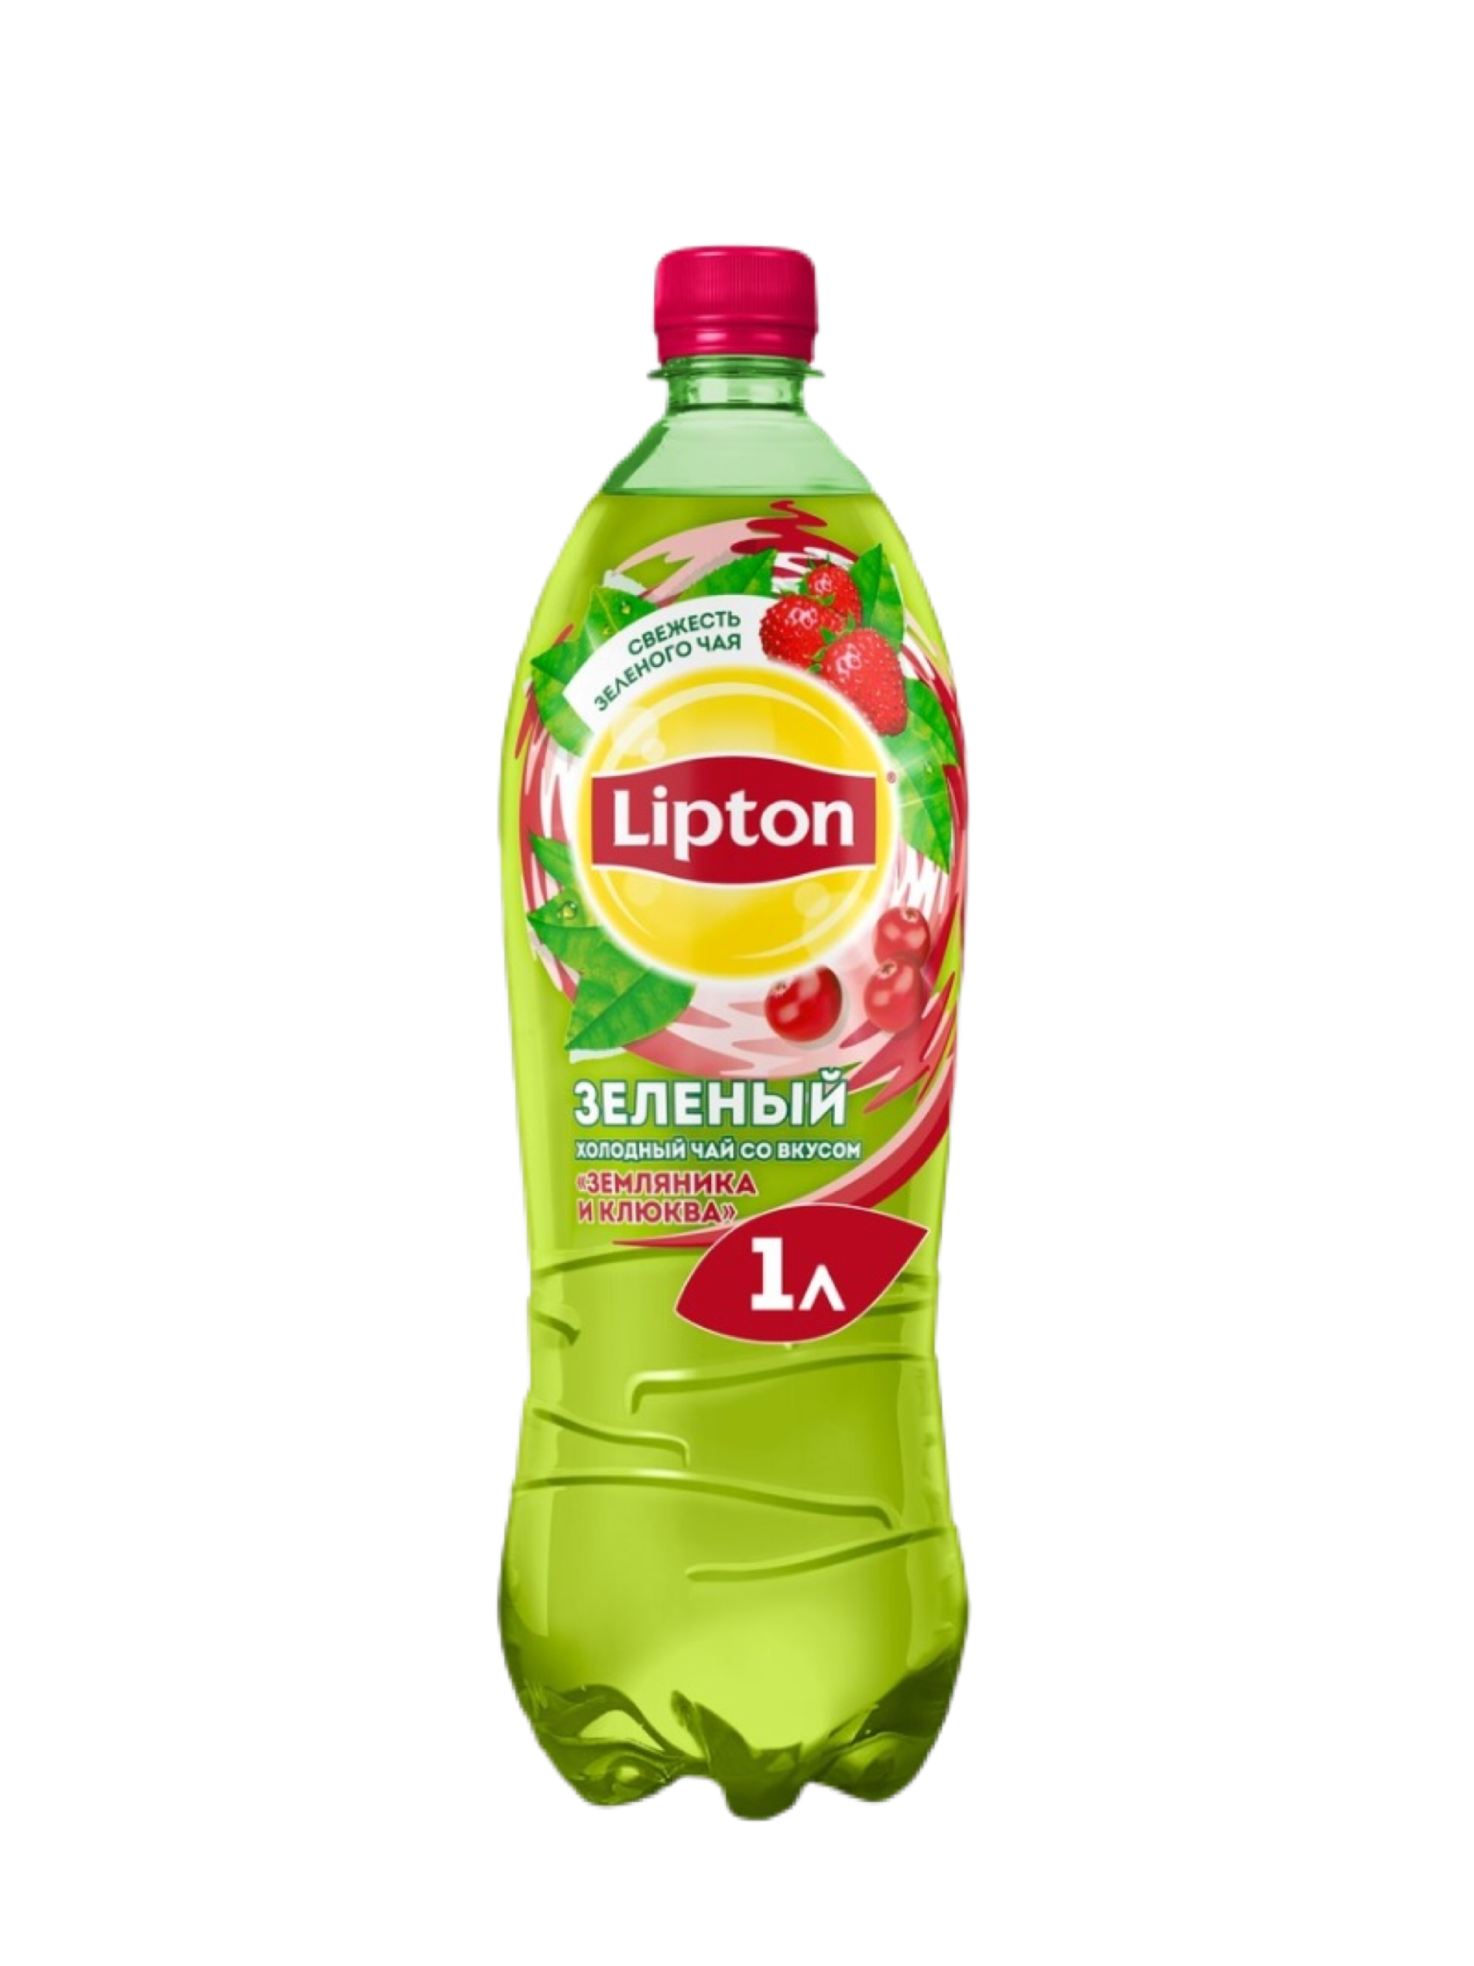 Без липтона. Чай Липтон 0.5 малина. Липтон зеленый с земляникой. Липтон зелёный чай в бутылке 05. Липтон 0,5 и 1 л.